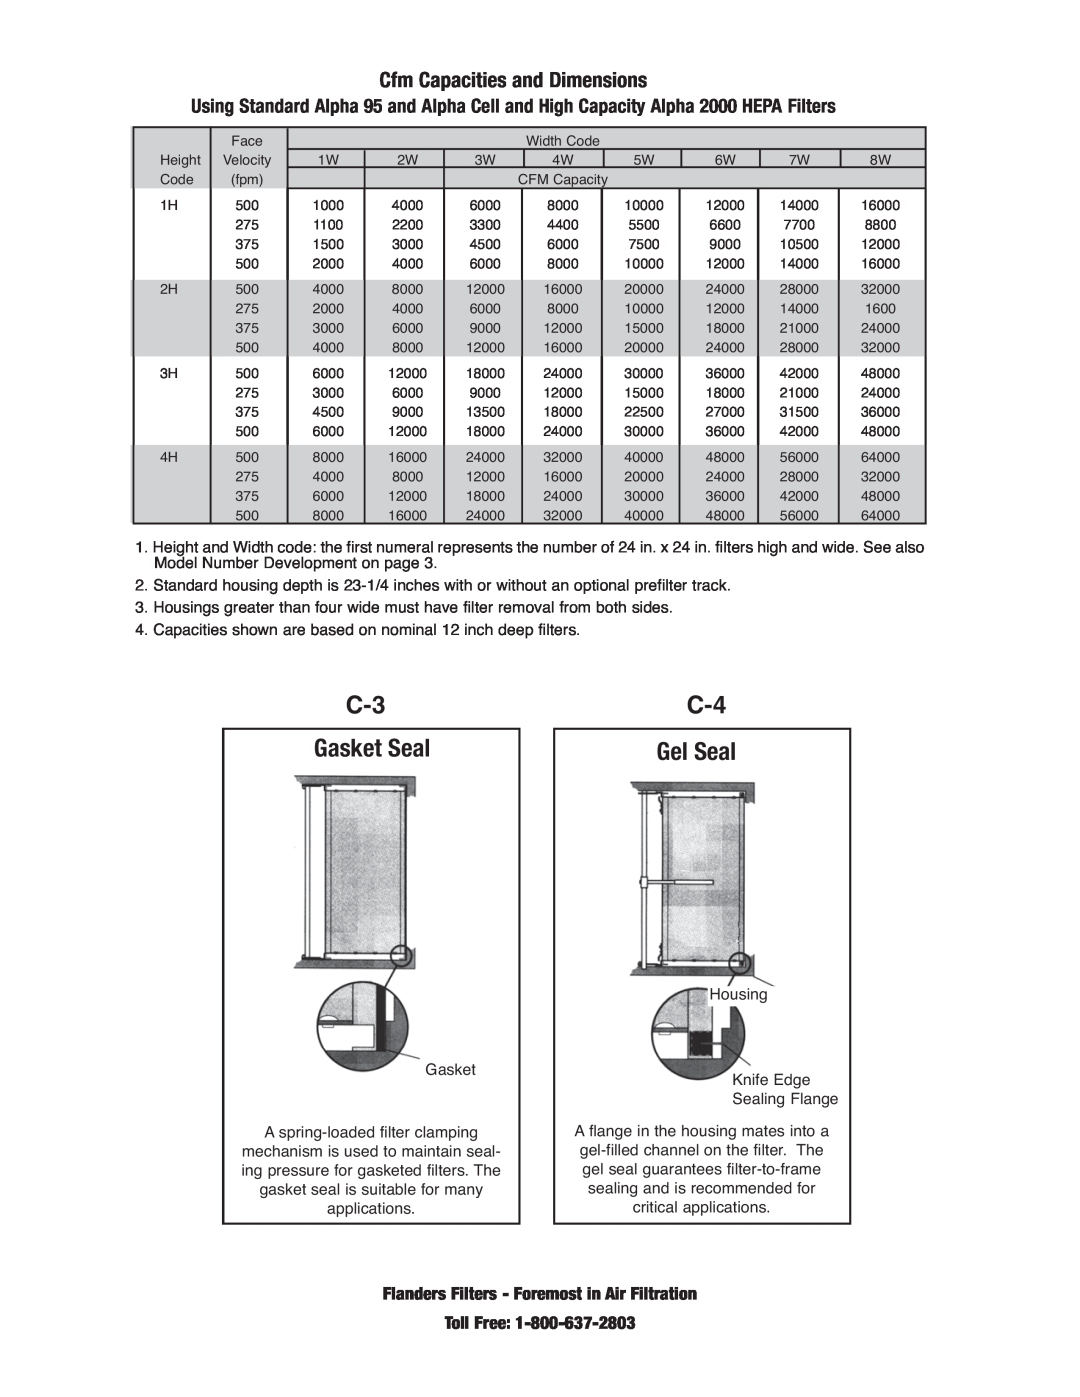 Precisionaire manual C-3 Gasket Seal, C-4 Gel Seal, Cfm Capacities and Dimensions, Toll Free 